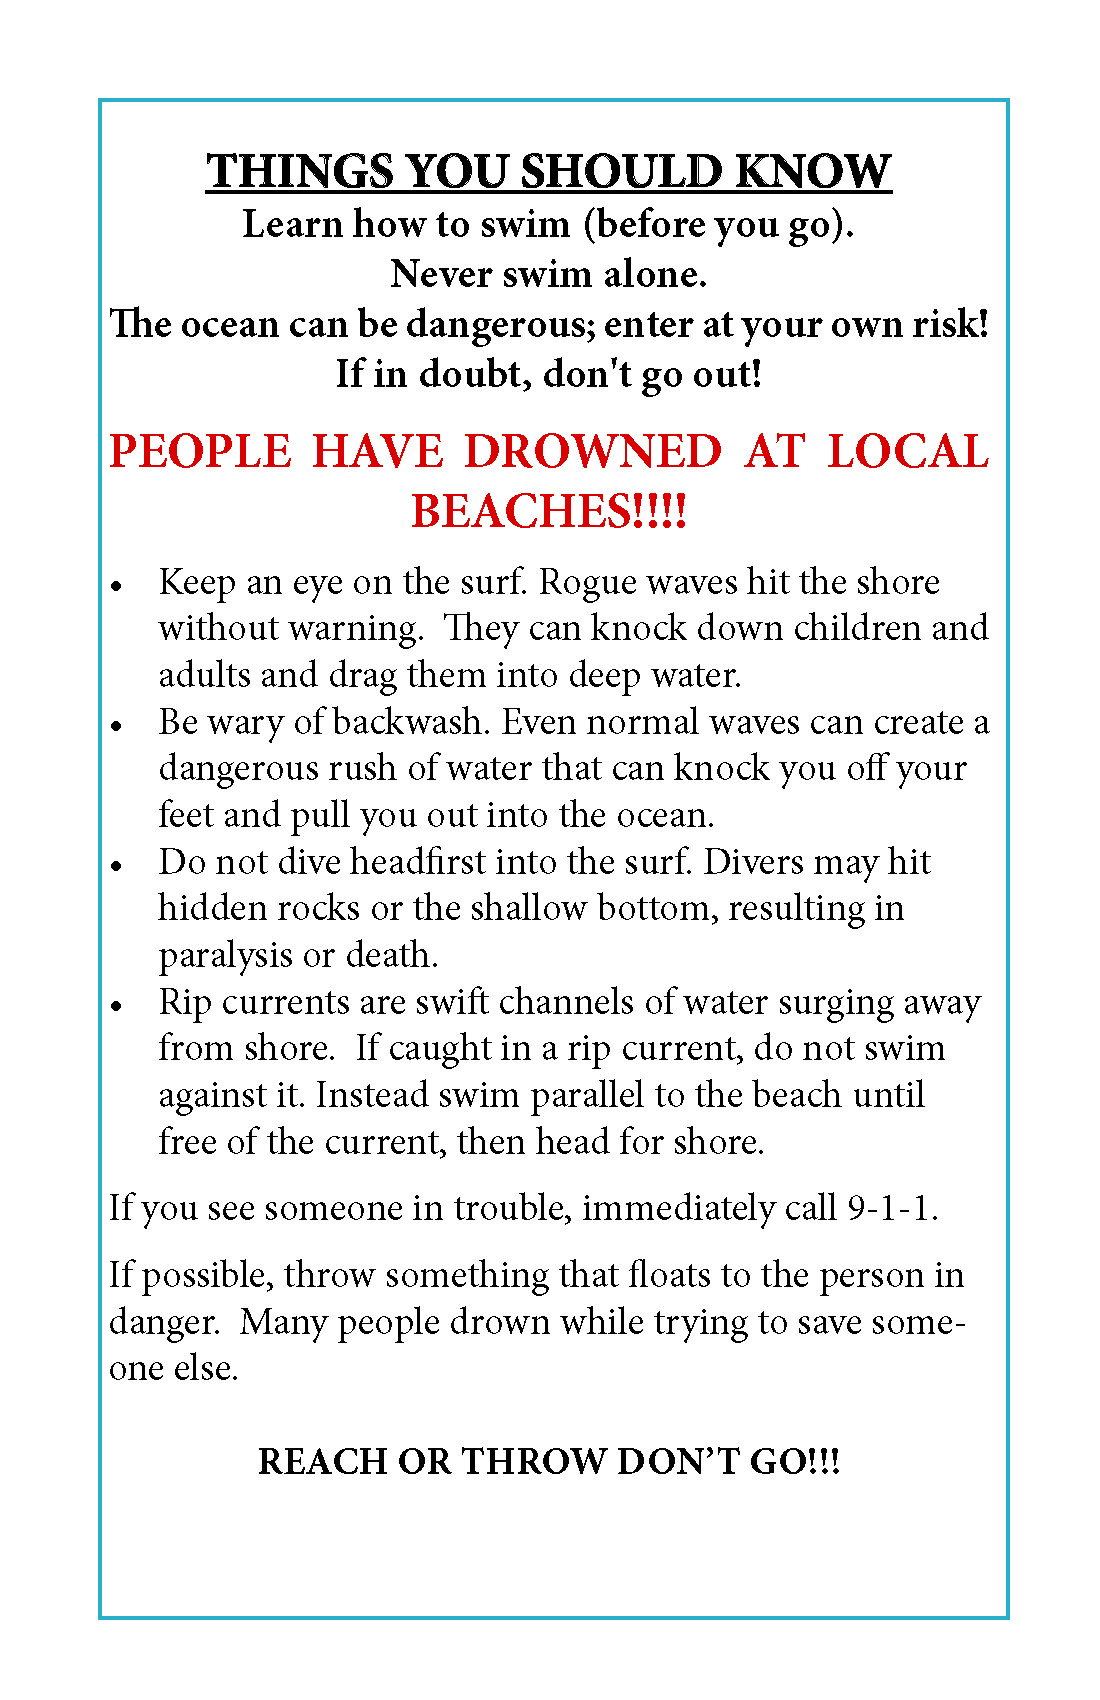 Beach Safety Tips Flyer